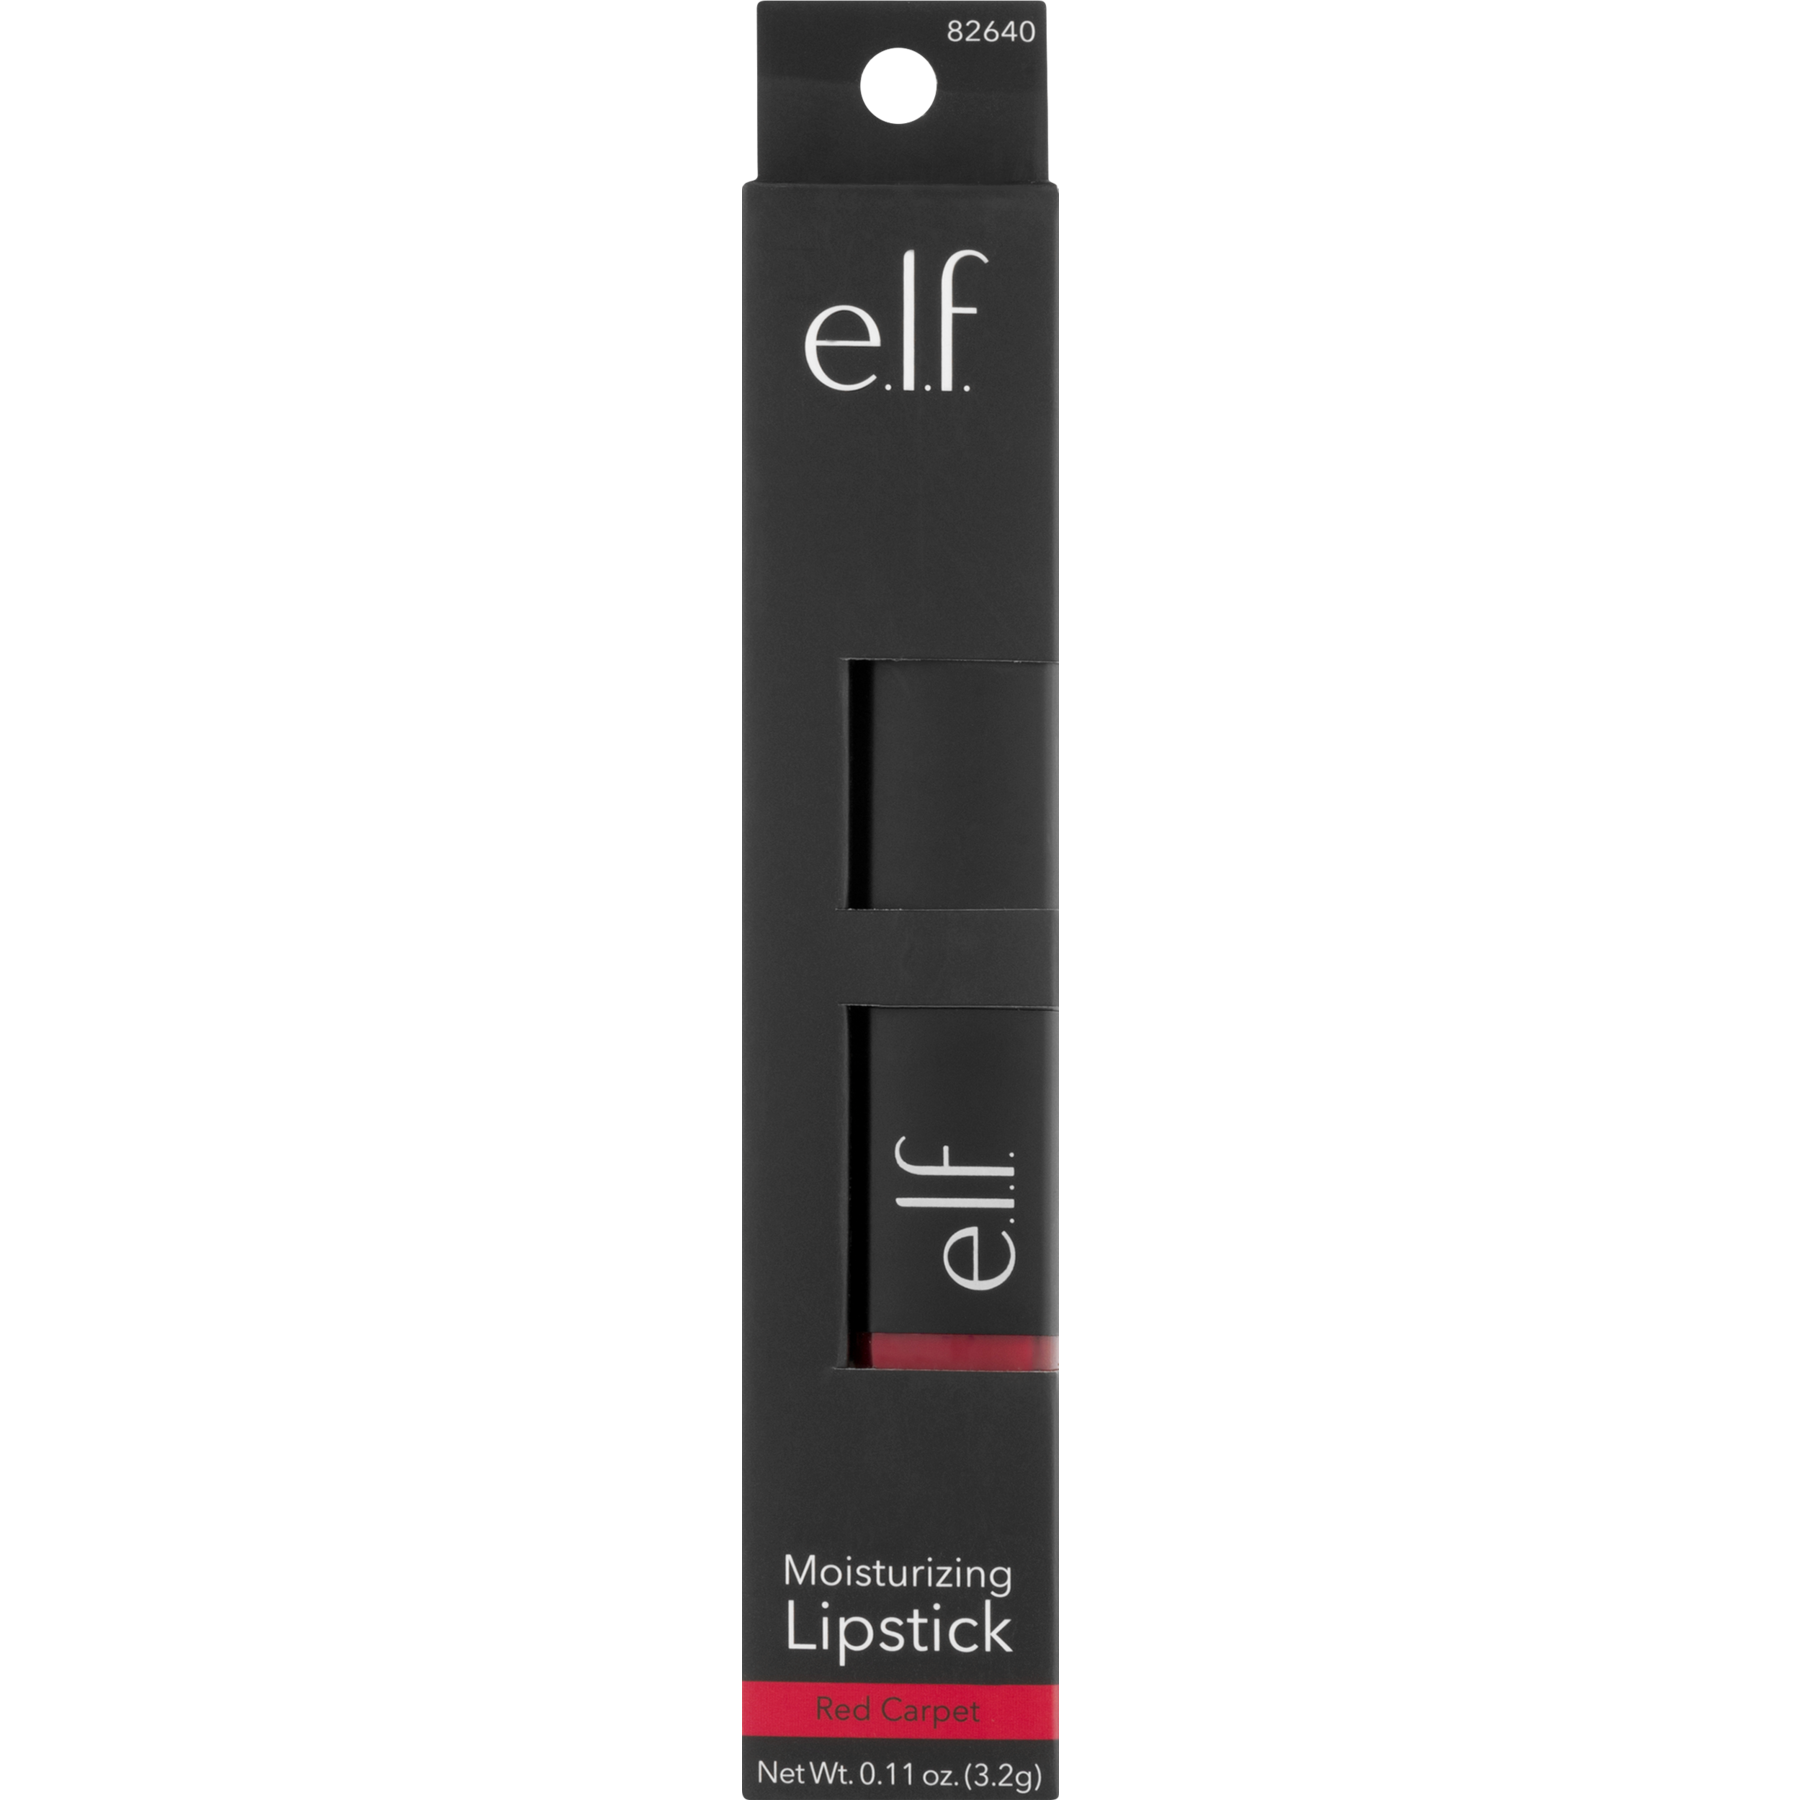 e.l.f. Moisturizing Lipstick, Red Carpet, 0.11 oz - image 4 of 5